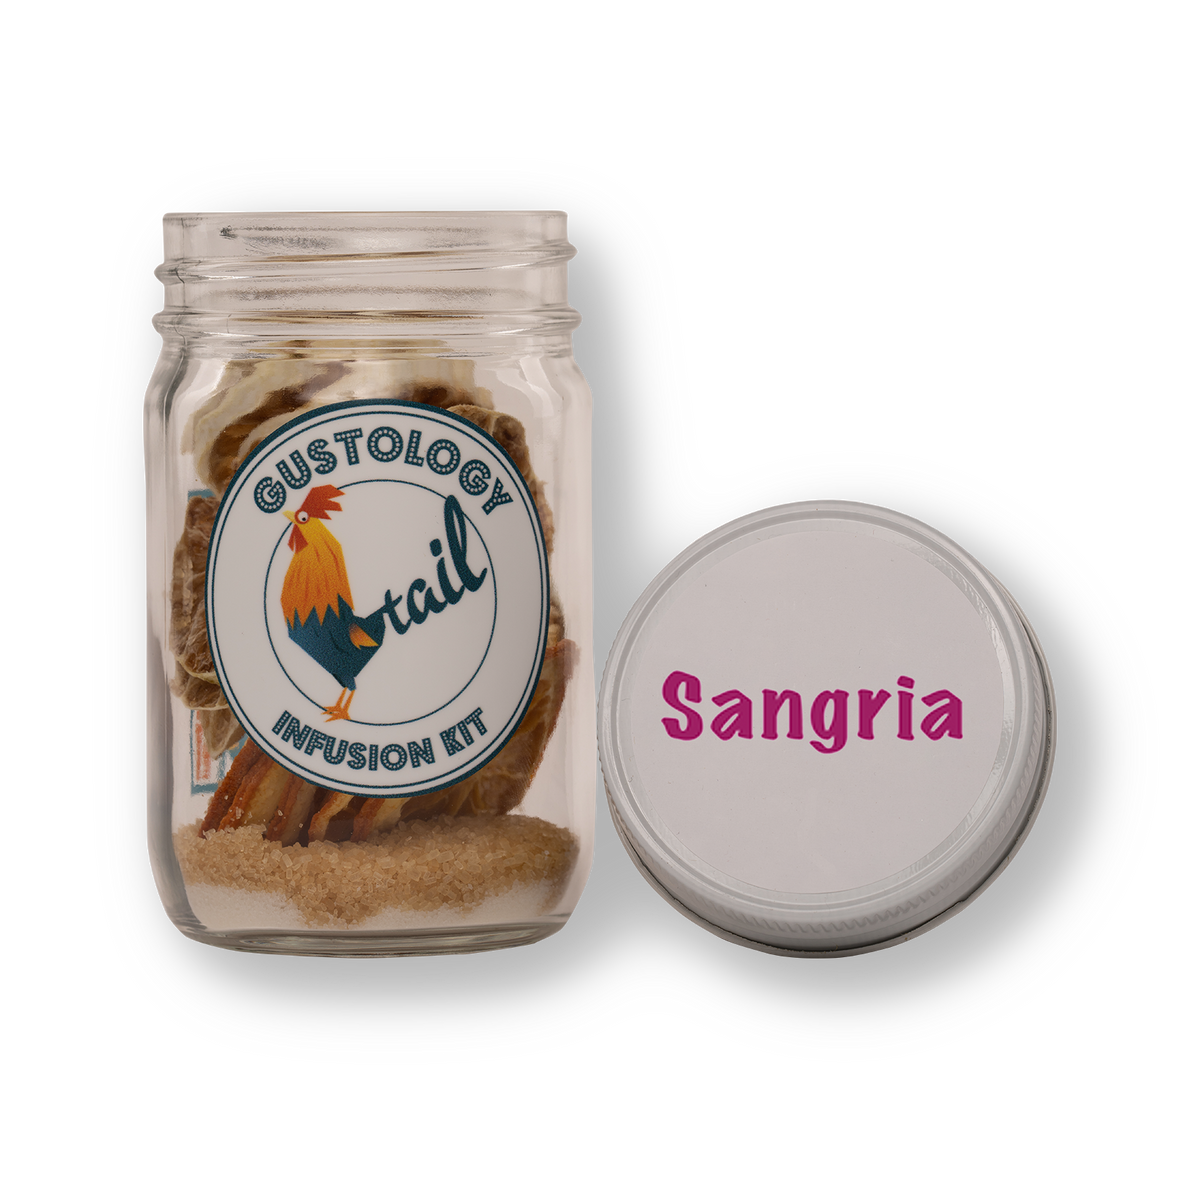 Gustology Cocktail Infusion Kits - Sangria – SA in a box LLC